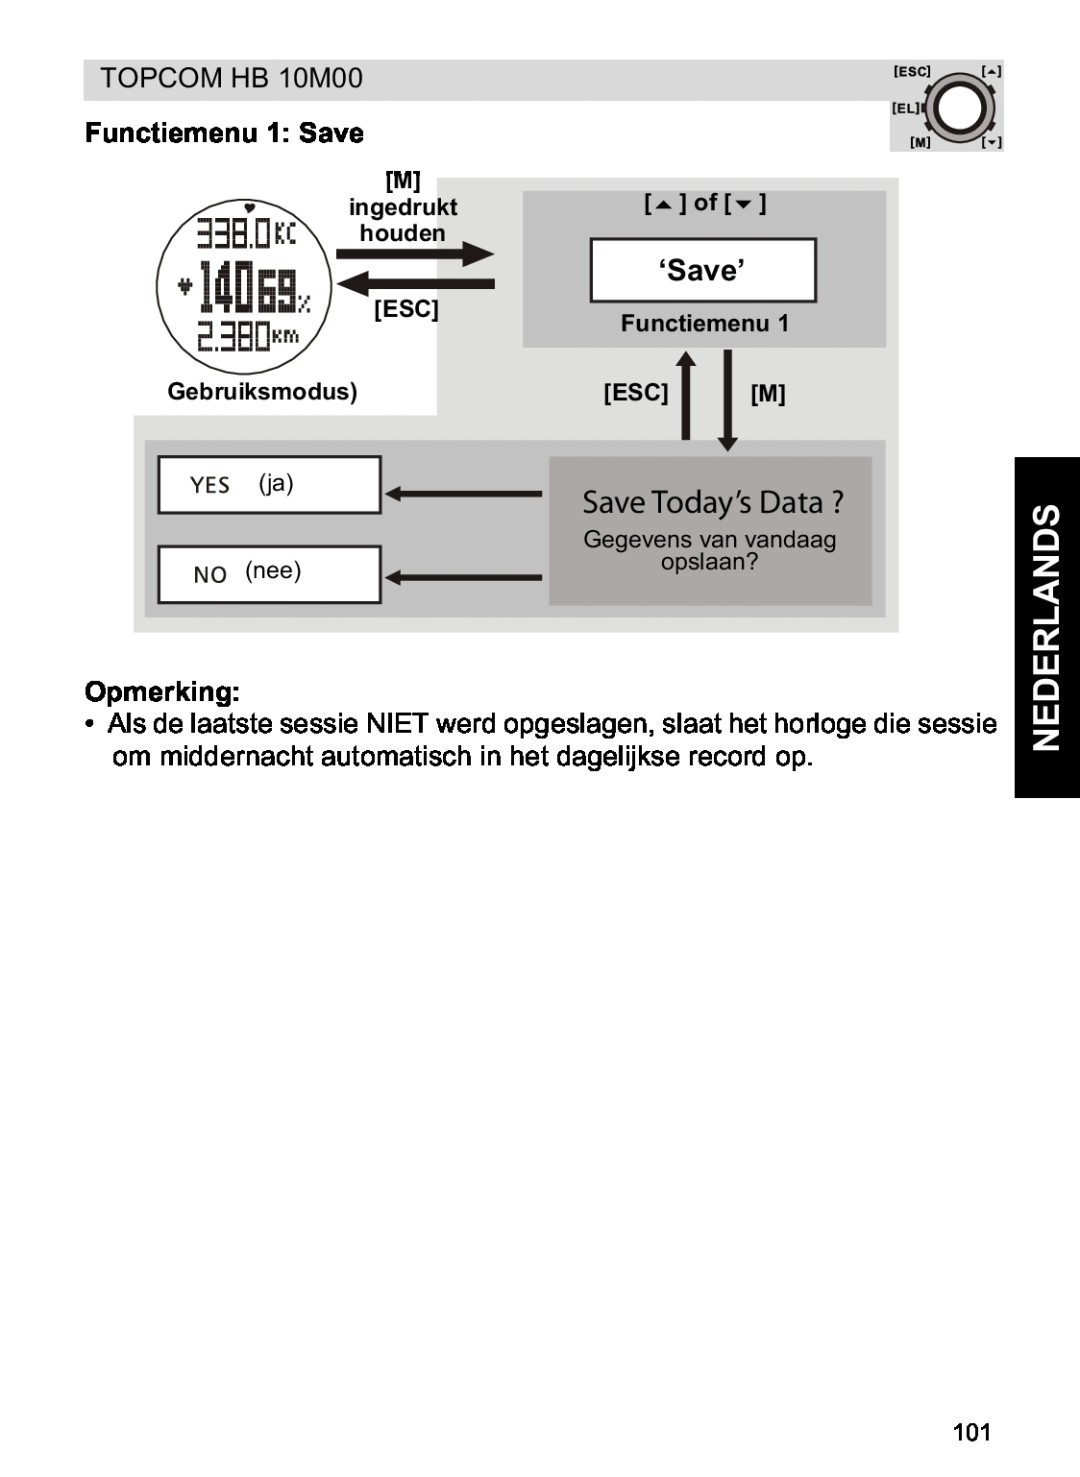 Topcom HB 10M00 manual Nederlands, Save Today’s Data ?, ‘Save’, Functiemenu 1 Save, Opmerking 